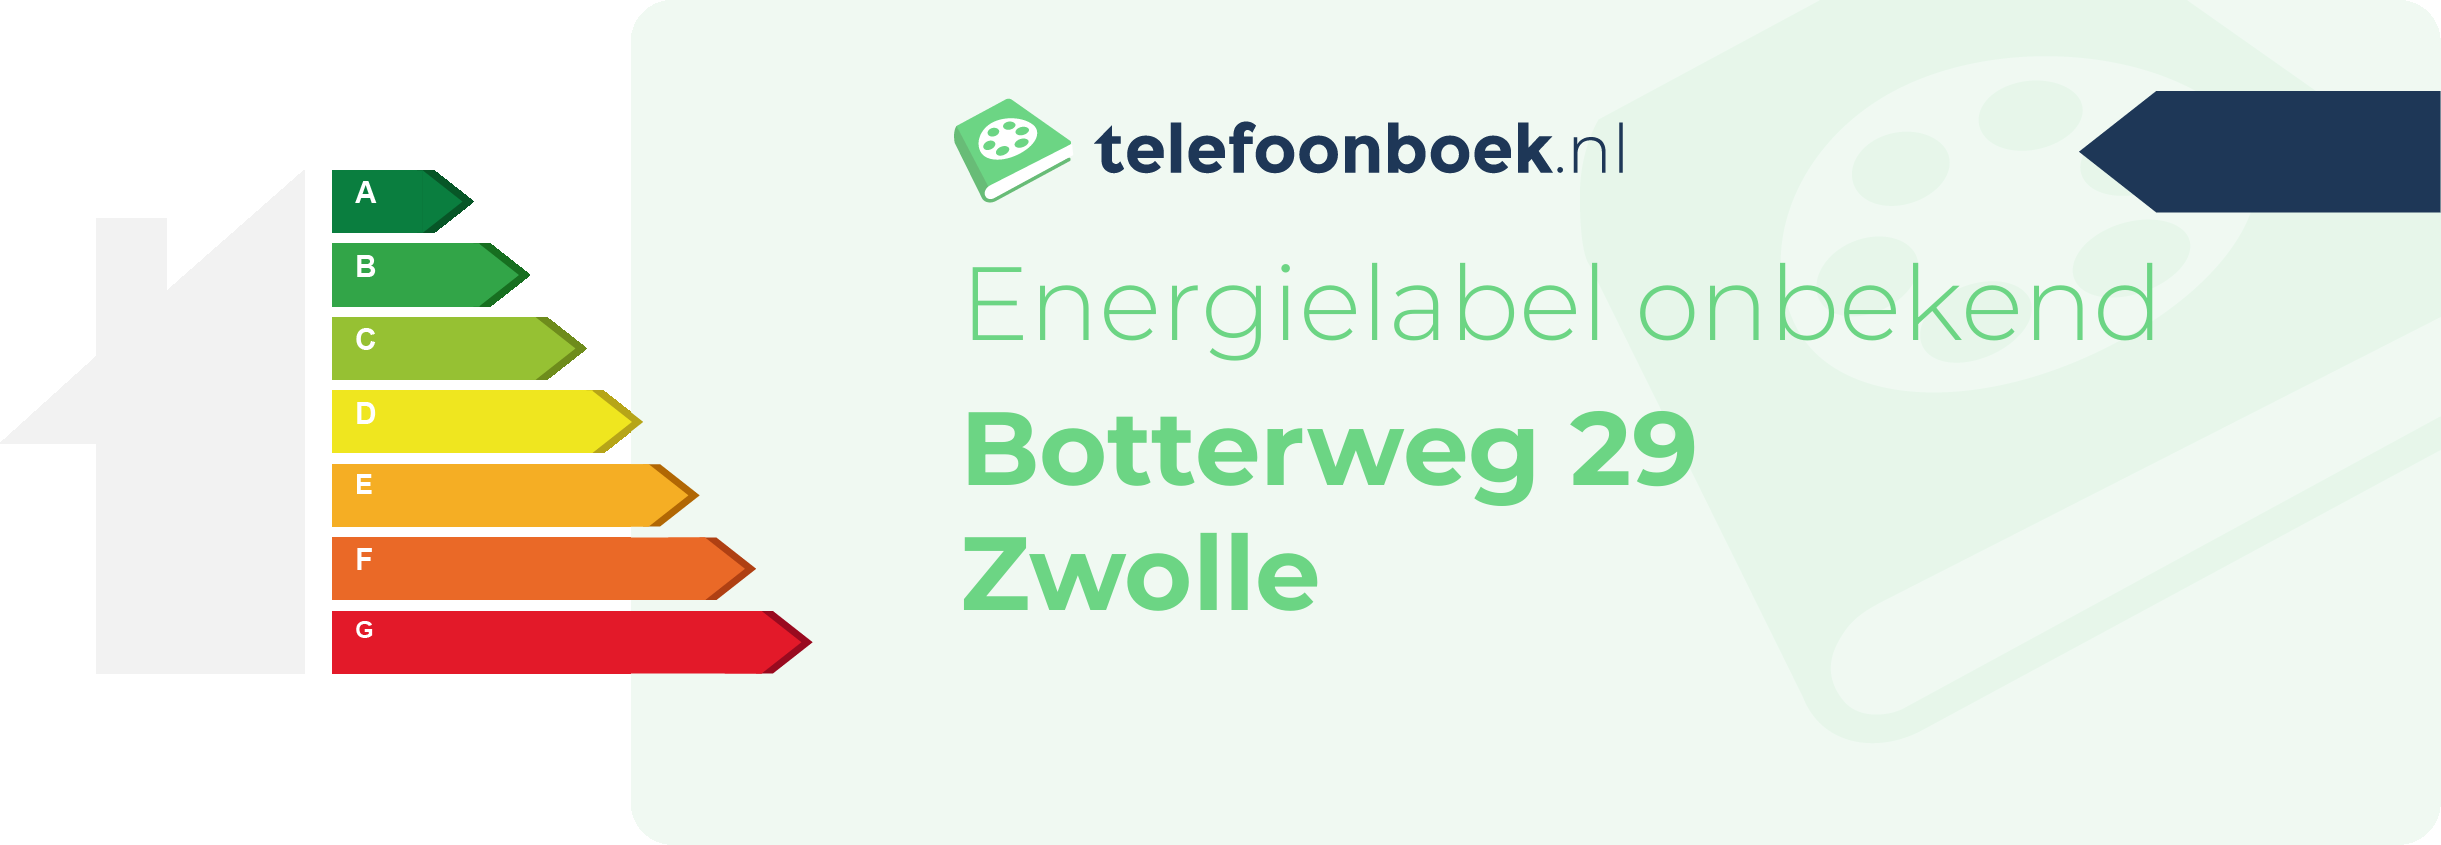 Energielabel Botterweg 29 Zwolle